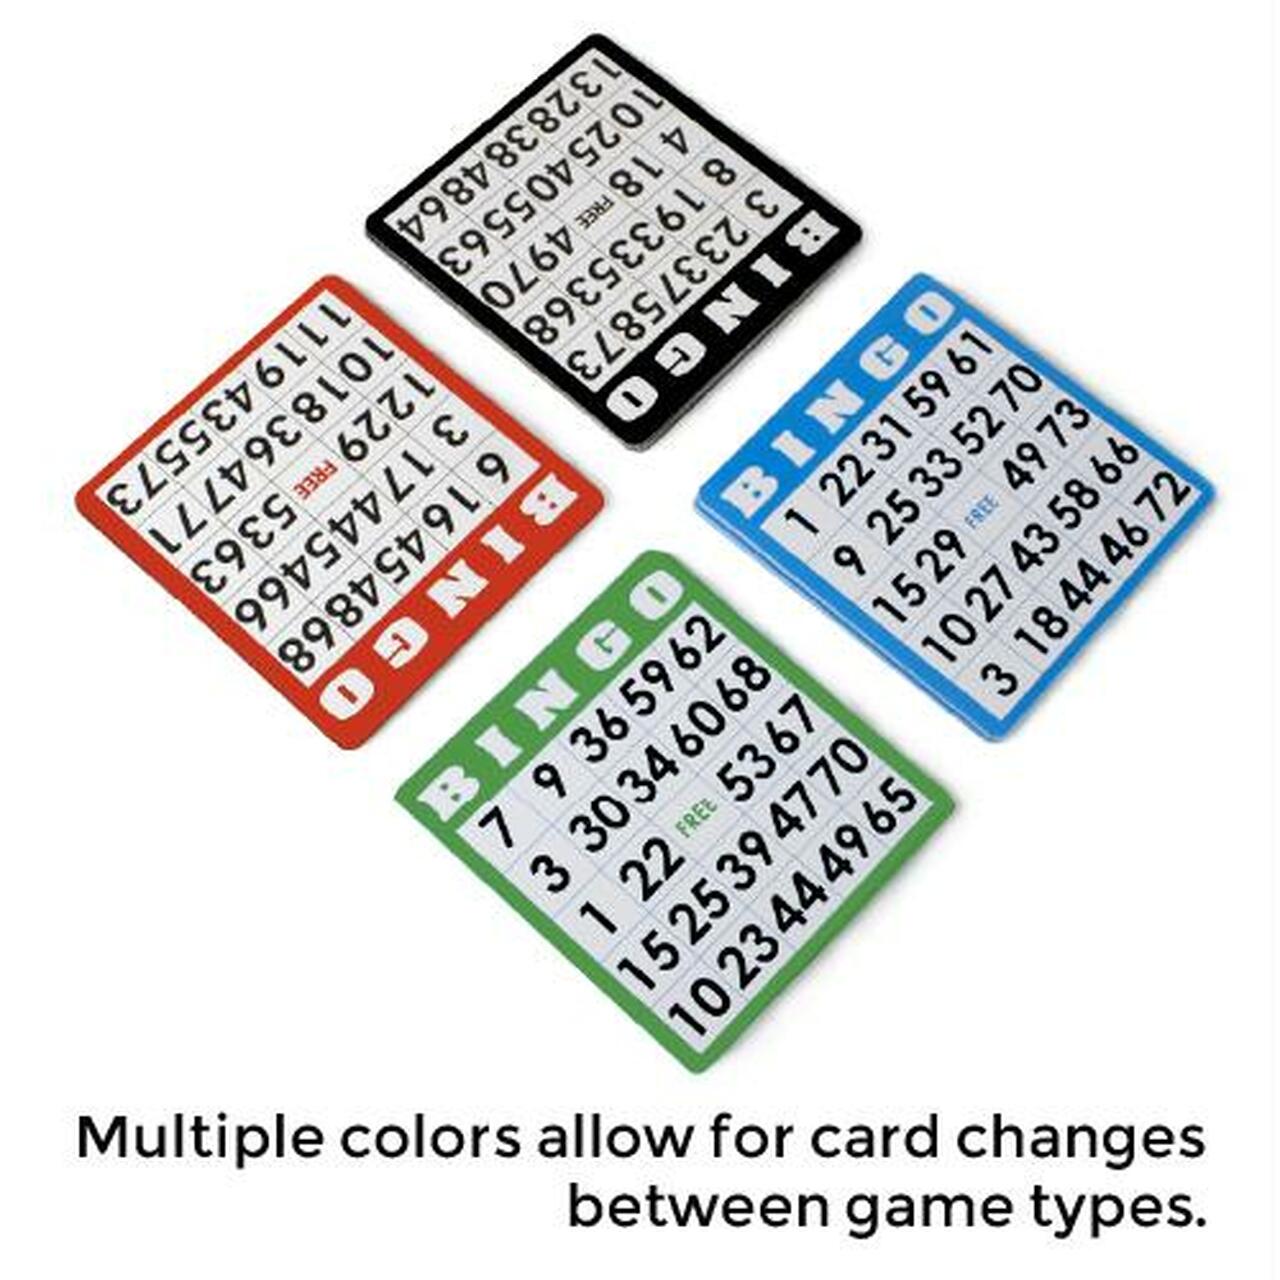 100 Free Bingo Cards